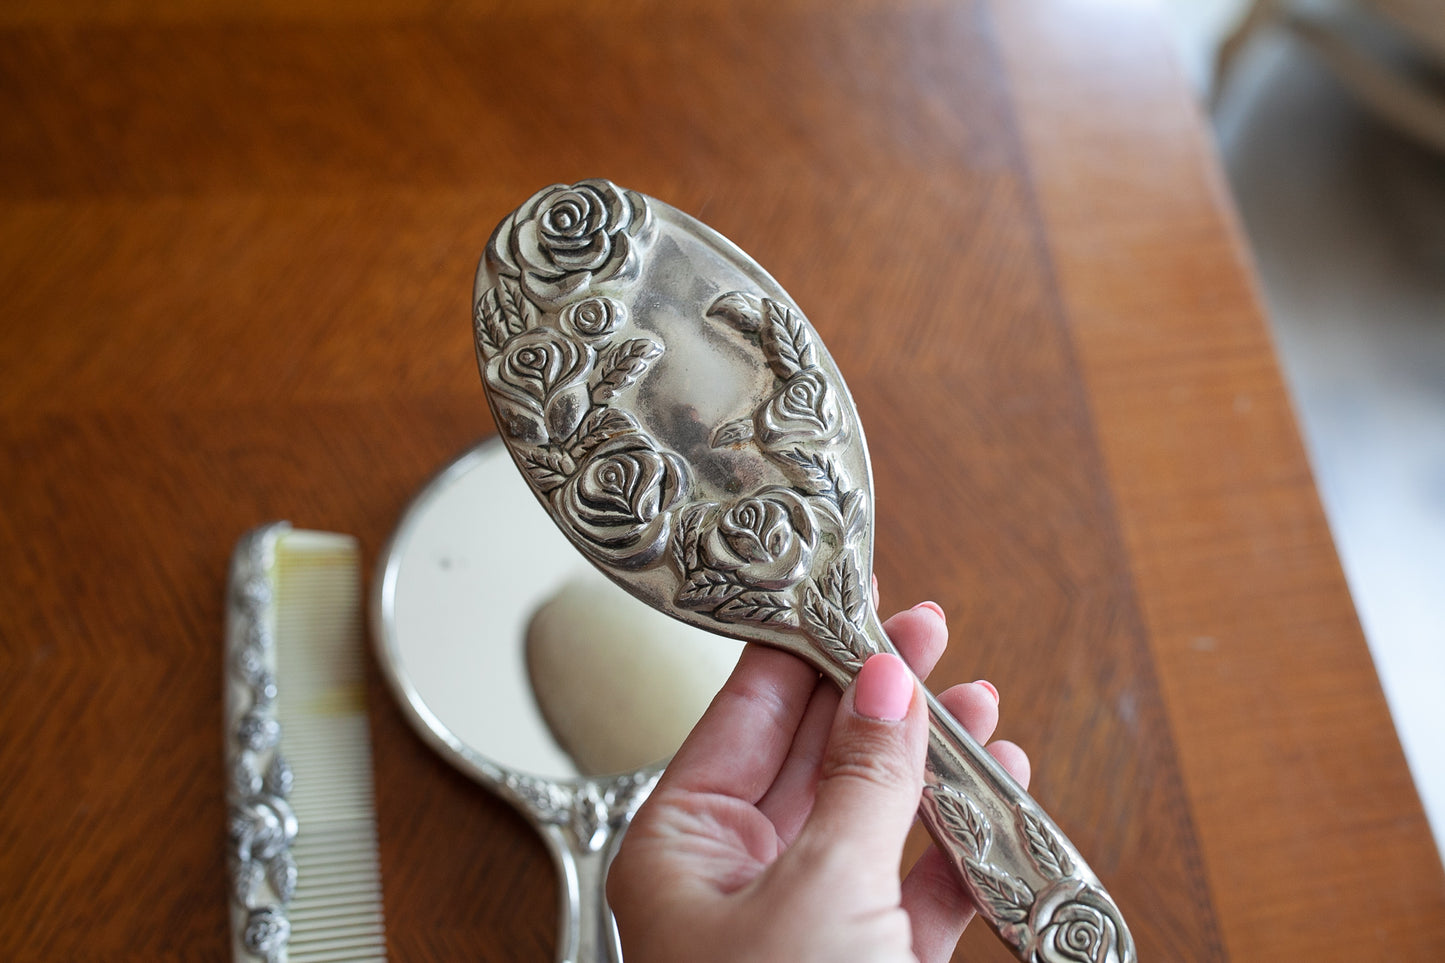 Vintage Mirror and Comb Set - Vanity Set - Silver hand mirror - Comb - Silver brush